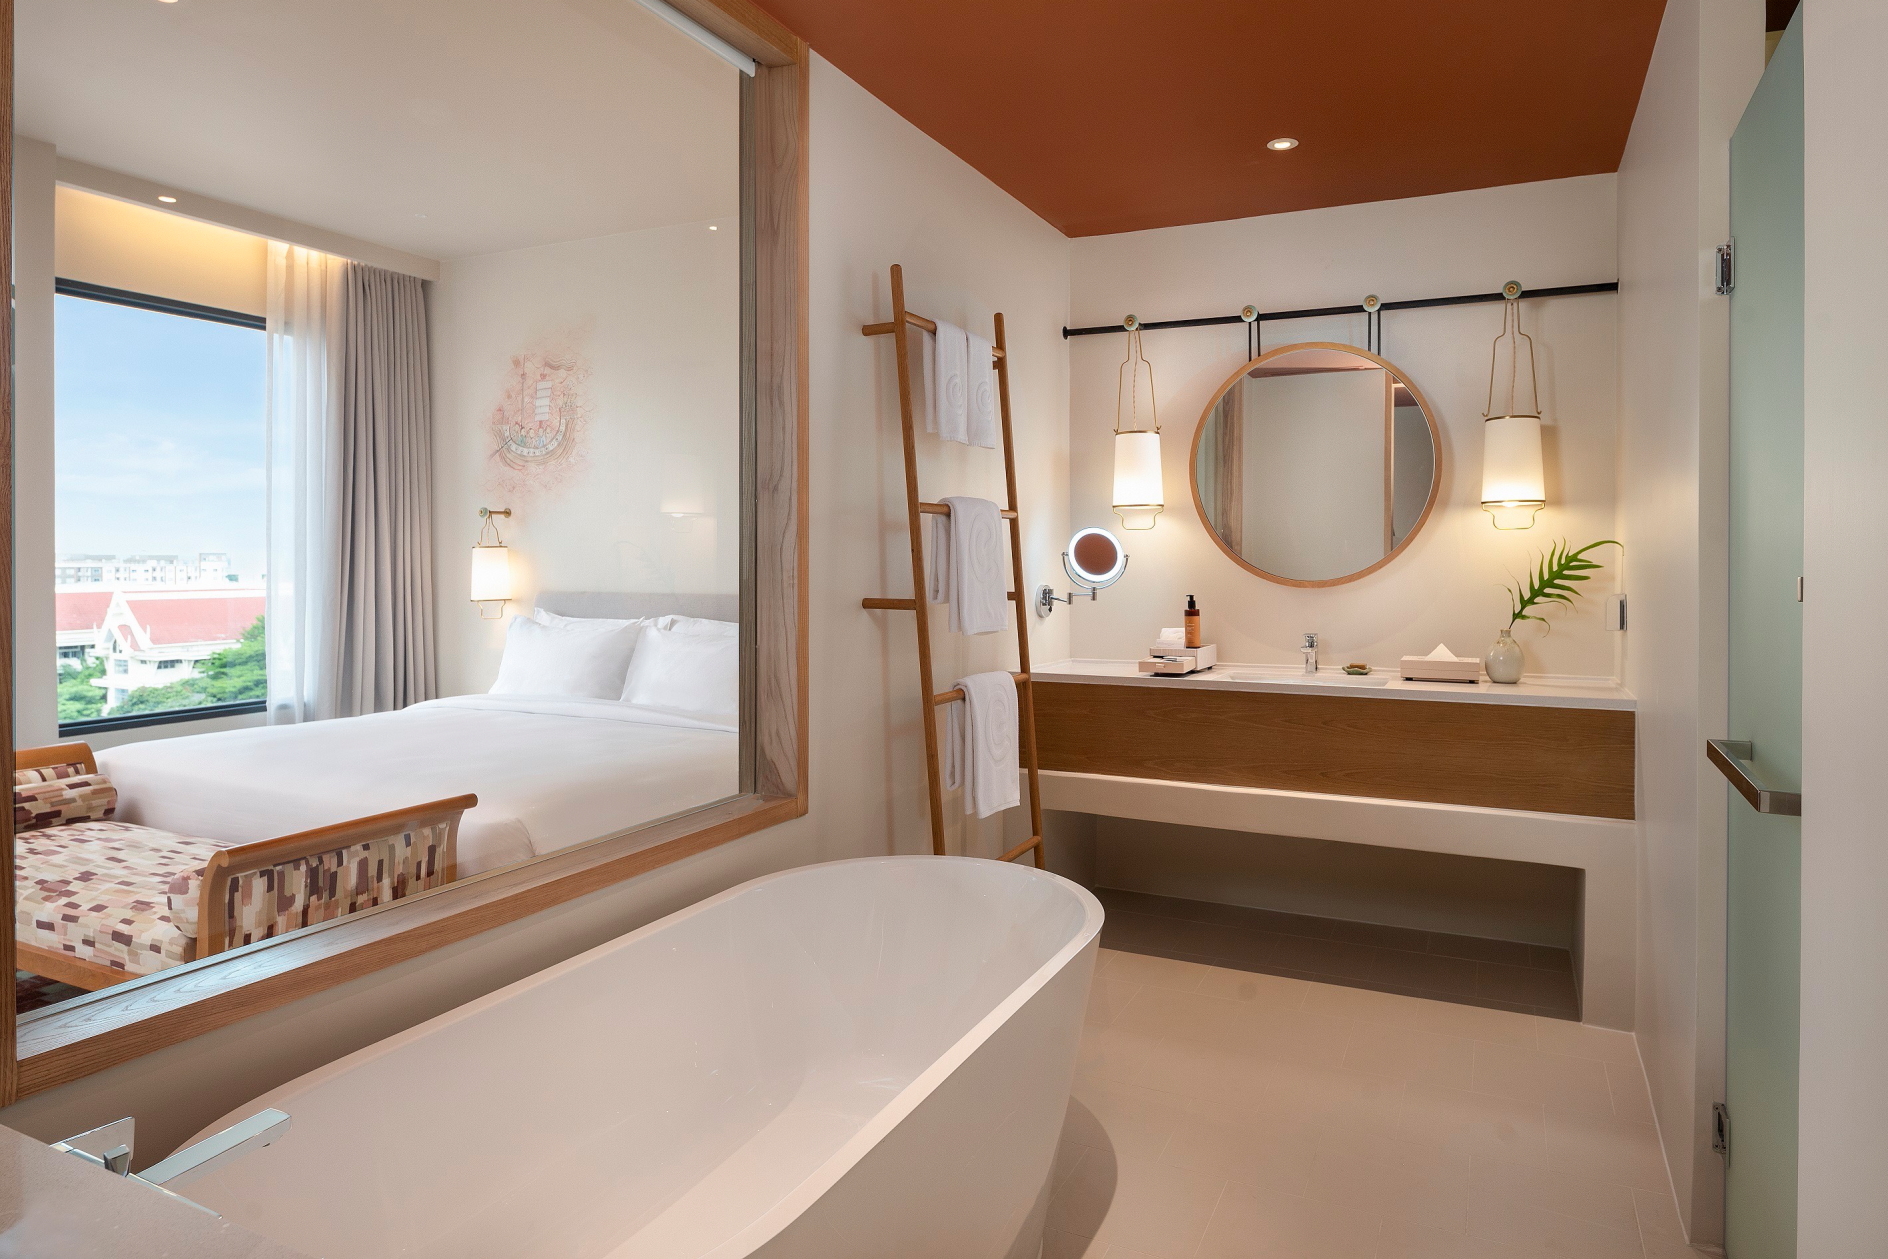 Room at Centara Ayutthaya hotel in Thailand. Click to enlarge.